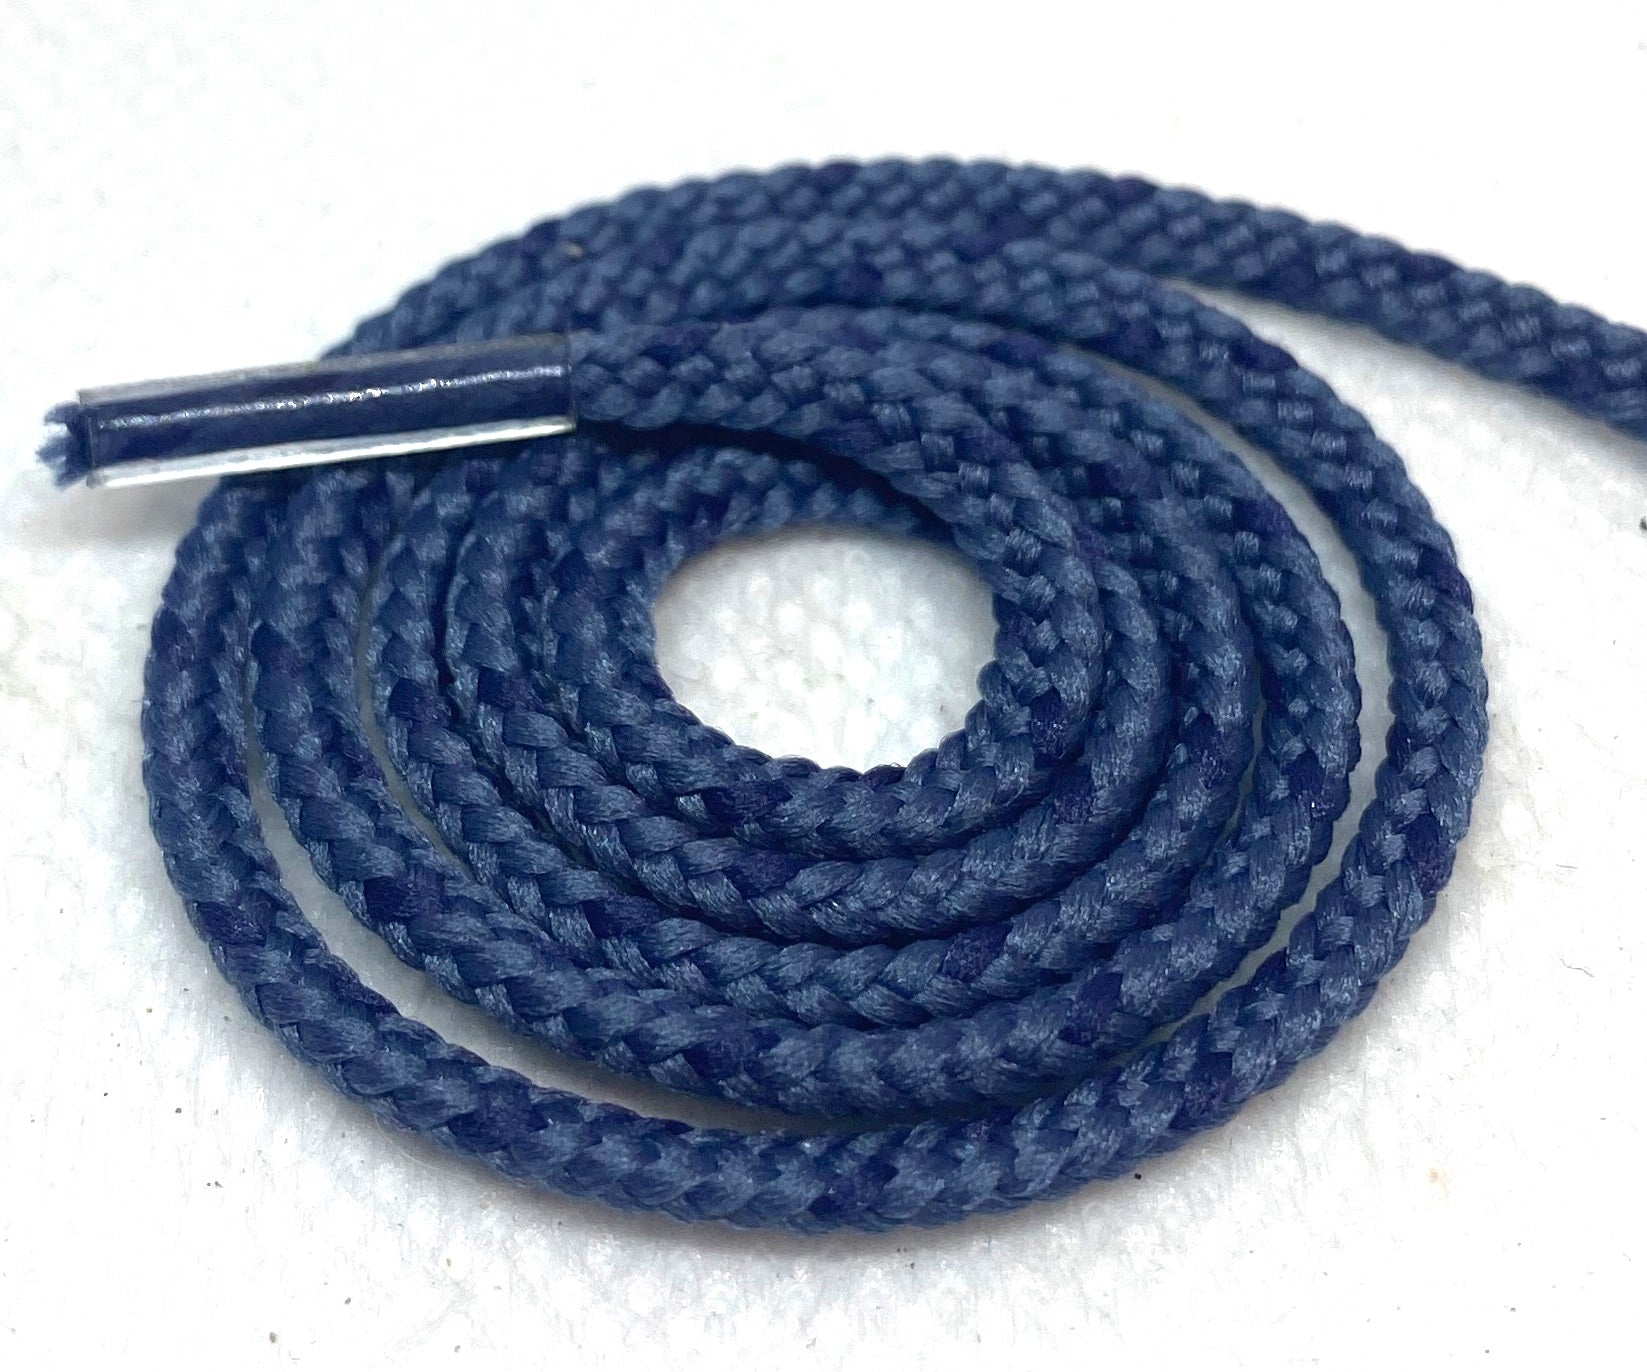 Round Dress Shoelaces - Blue with Navy Blue Flecks